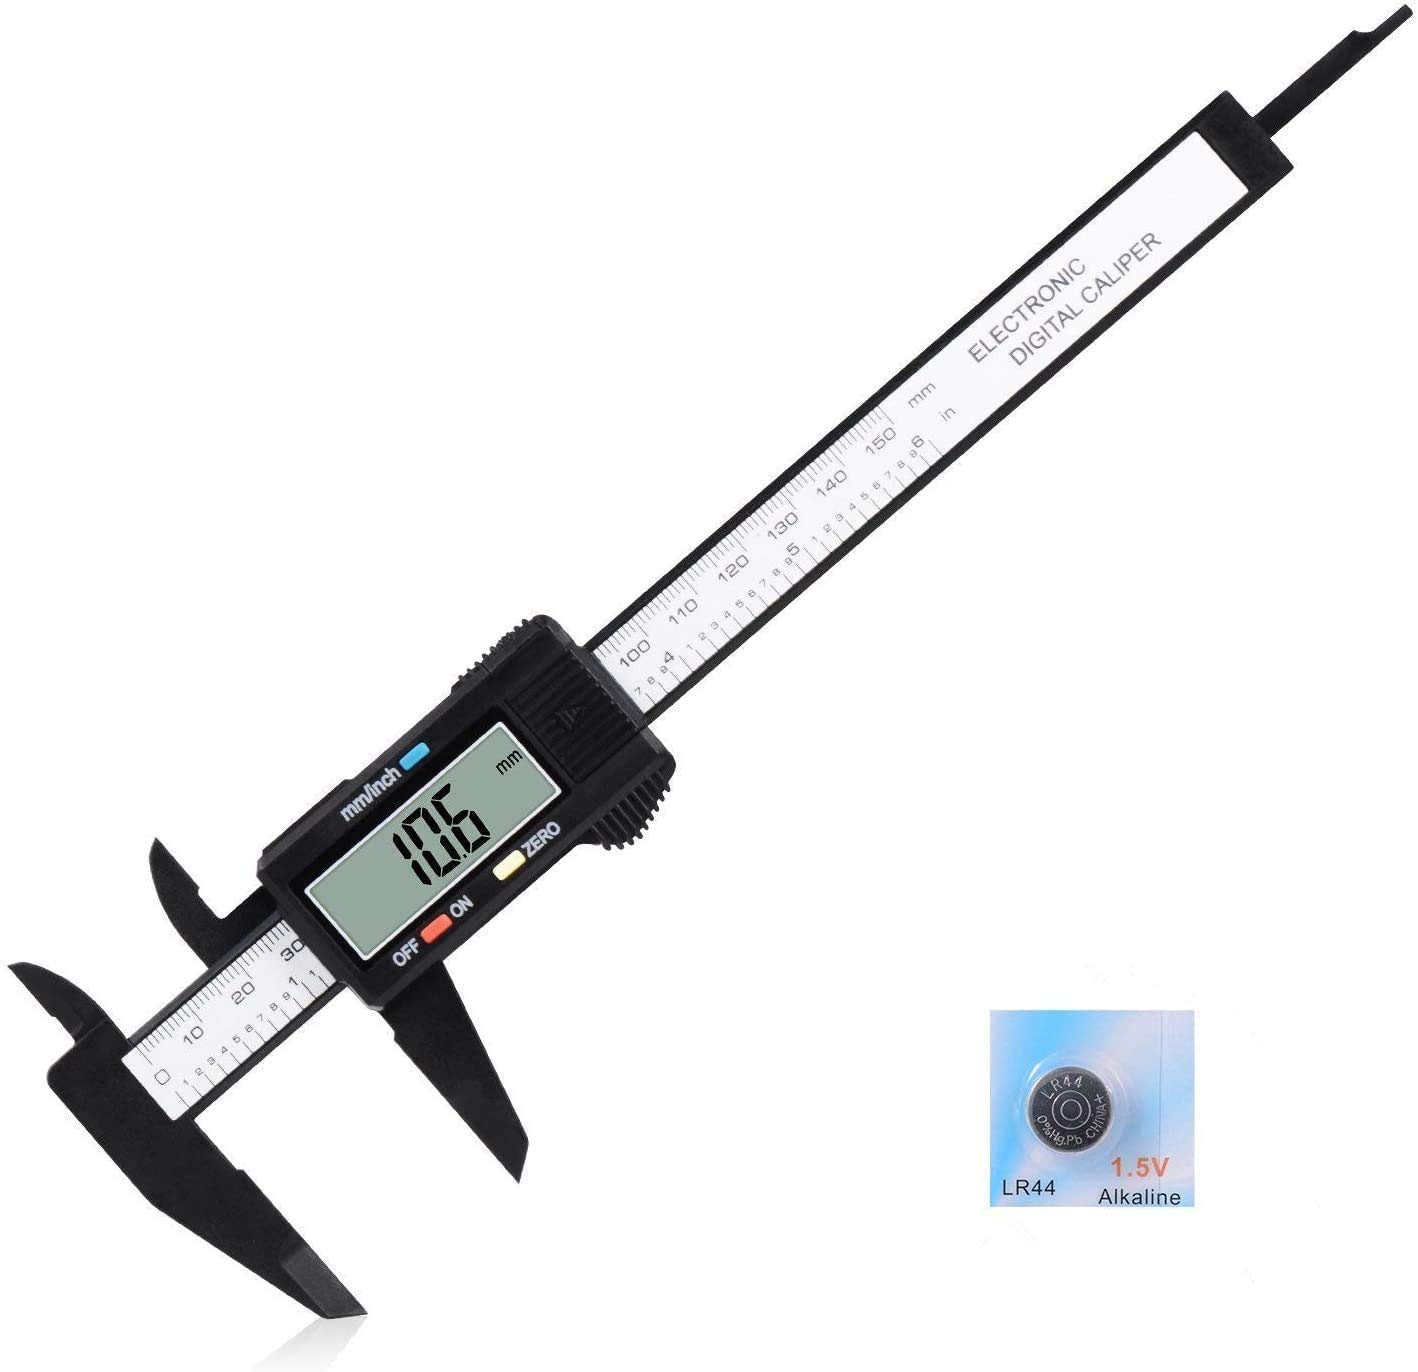 CACHOR Digital Caliper Measuring Tool, Cachor 0-6 Vernier Caliper - 150Mm Electronic Micrometer Caliper With Large Lcd Screen, Auto-Off